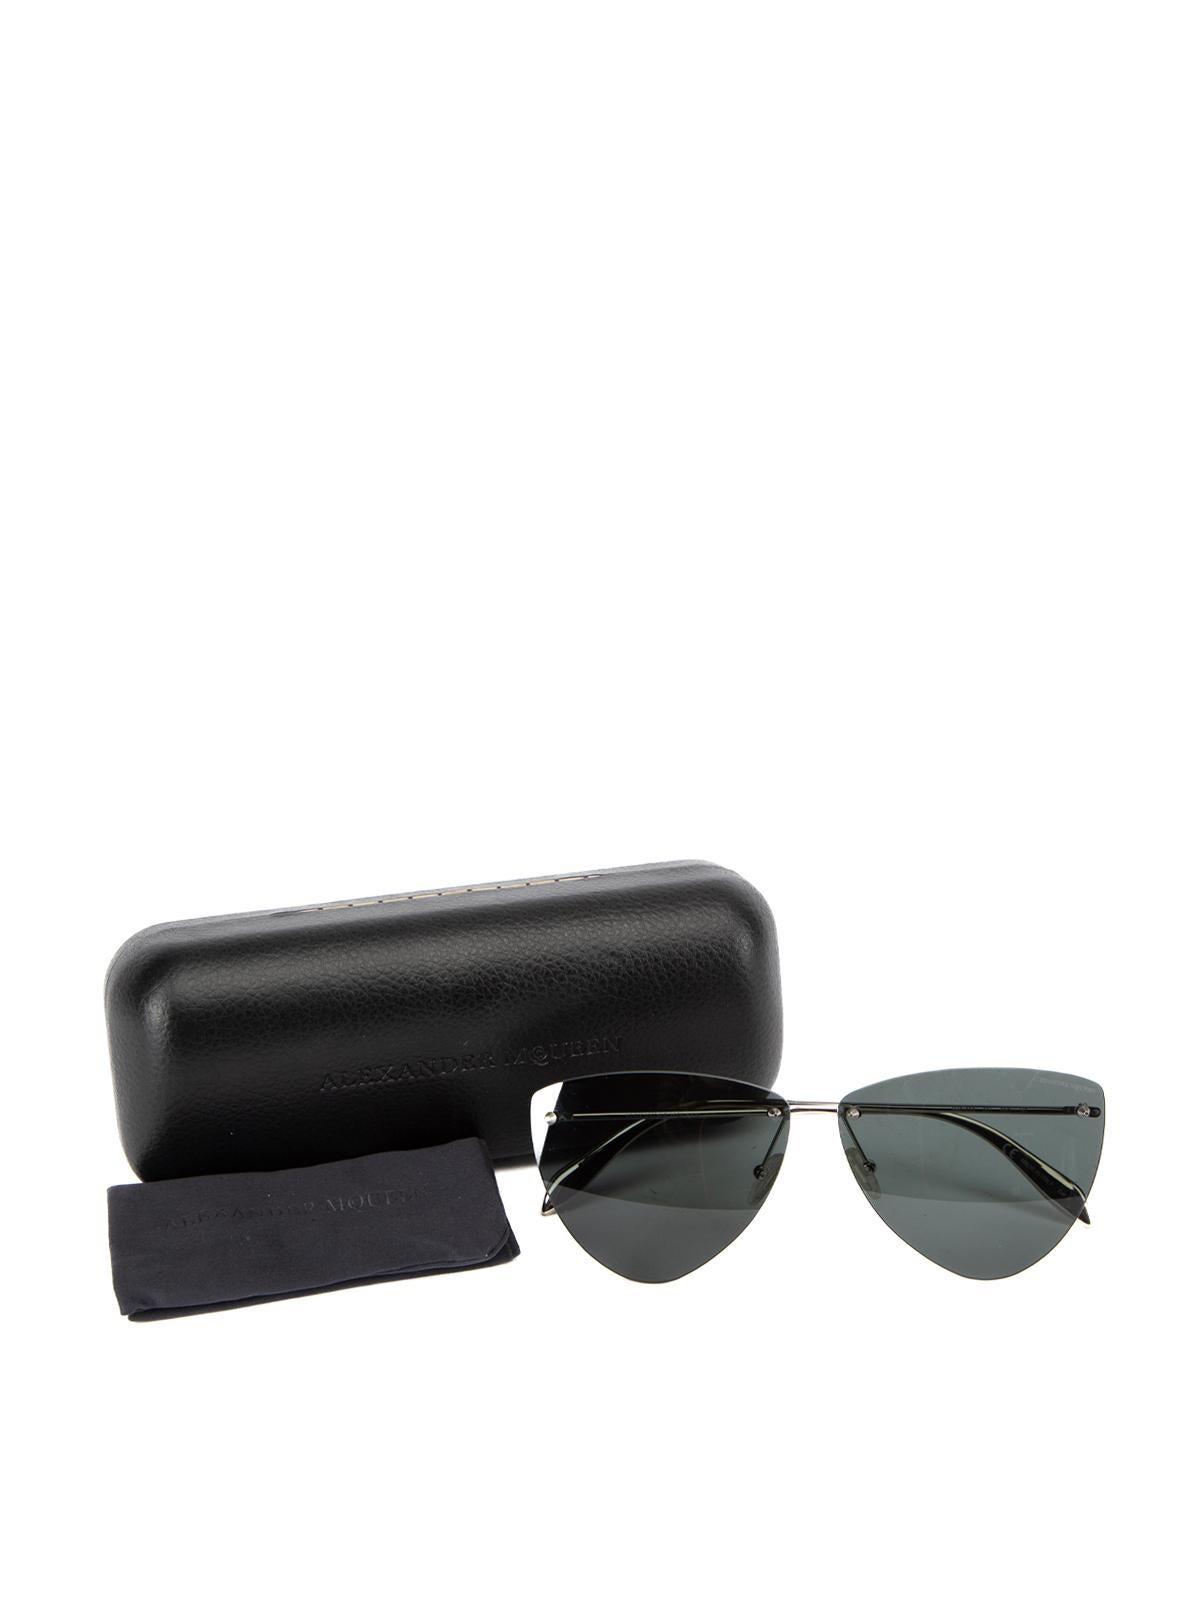 Pre-Loved Alexander McQueen Women's Black Aviator AM0119SA Sunglasses 6